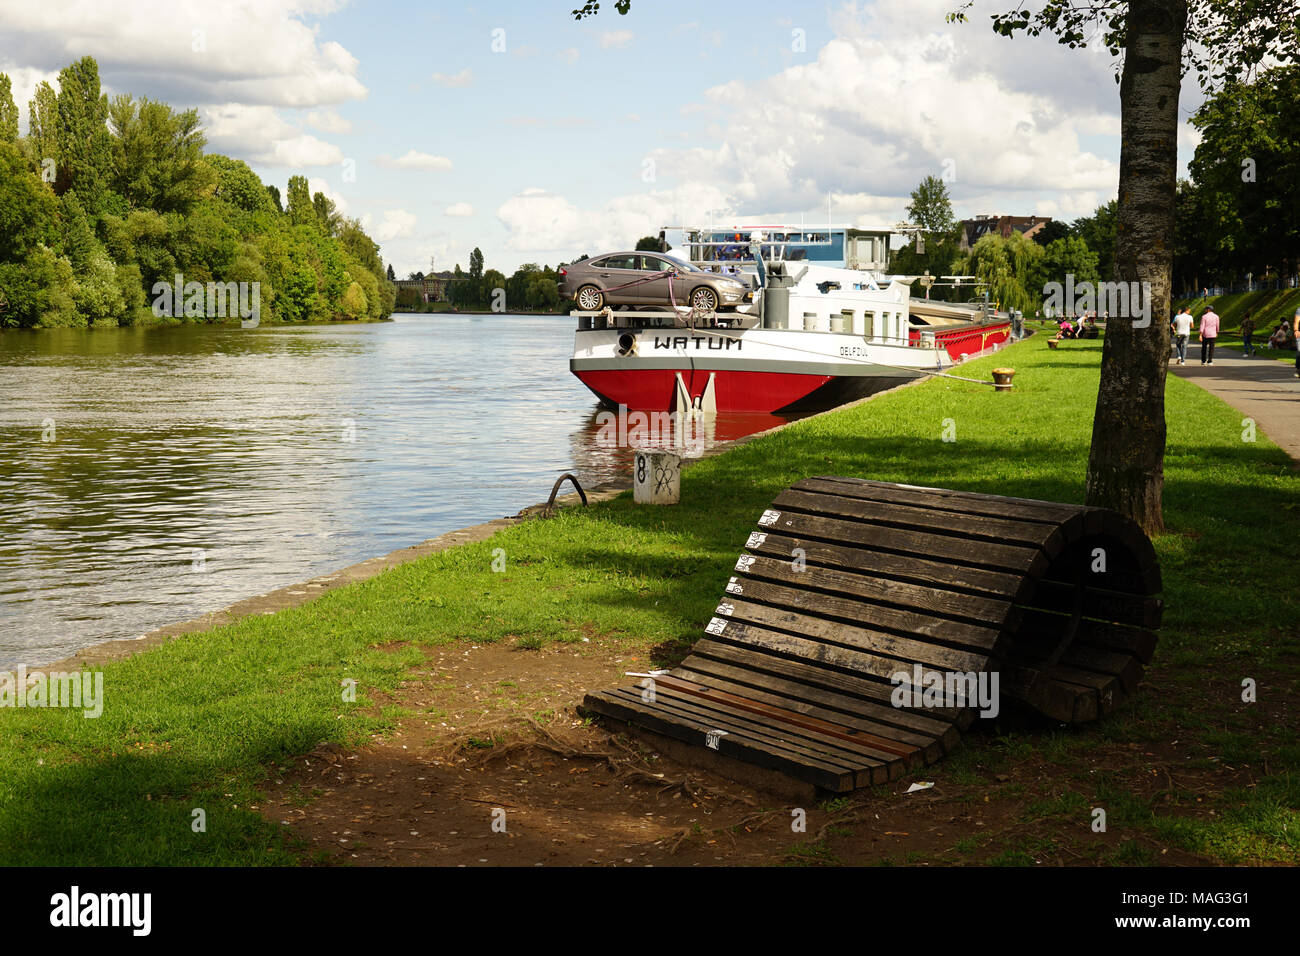 Riverside, Main, Offenbach am Main, Deutschland, Stockfoto